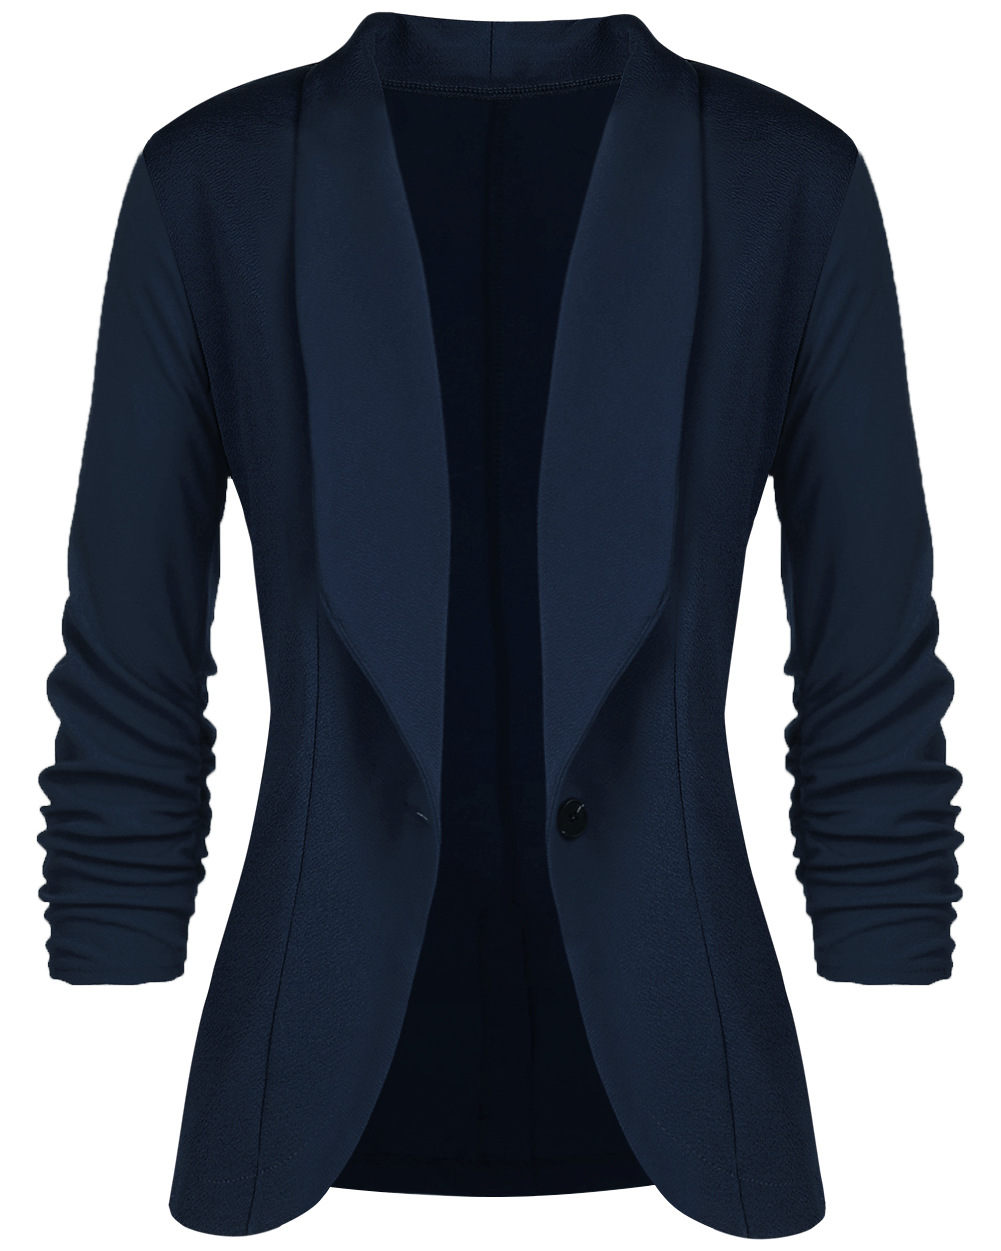 Women Slim Suit Coat 3/4 Sleeve One Button Casual Office Business Blazer Jacket Outwear Navy Blue